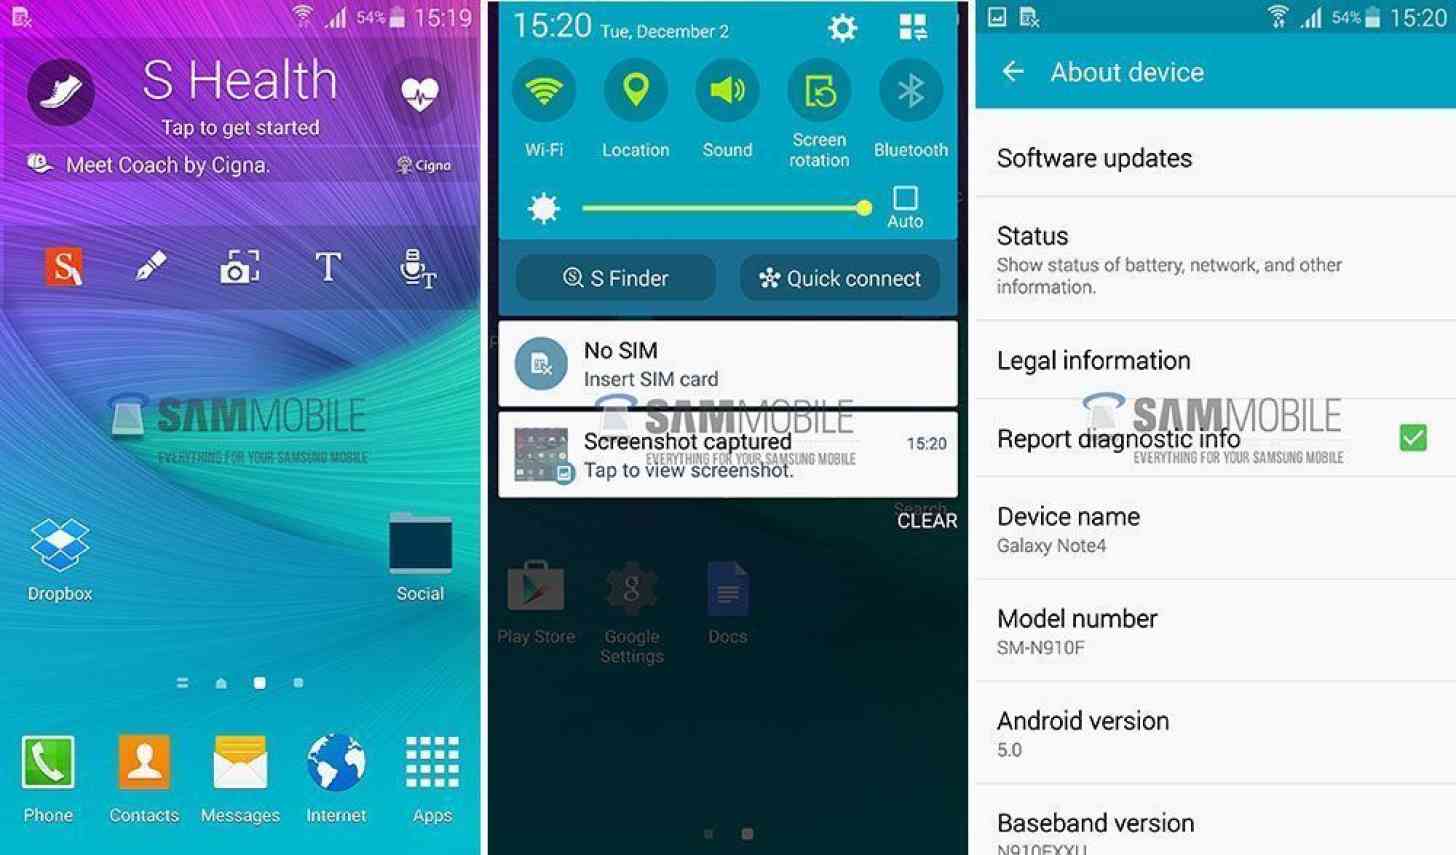 Samsung Galaxy Note 4 Android 5.0 Lollipop screenshots